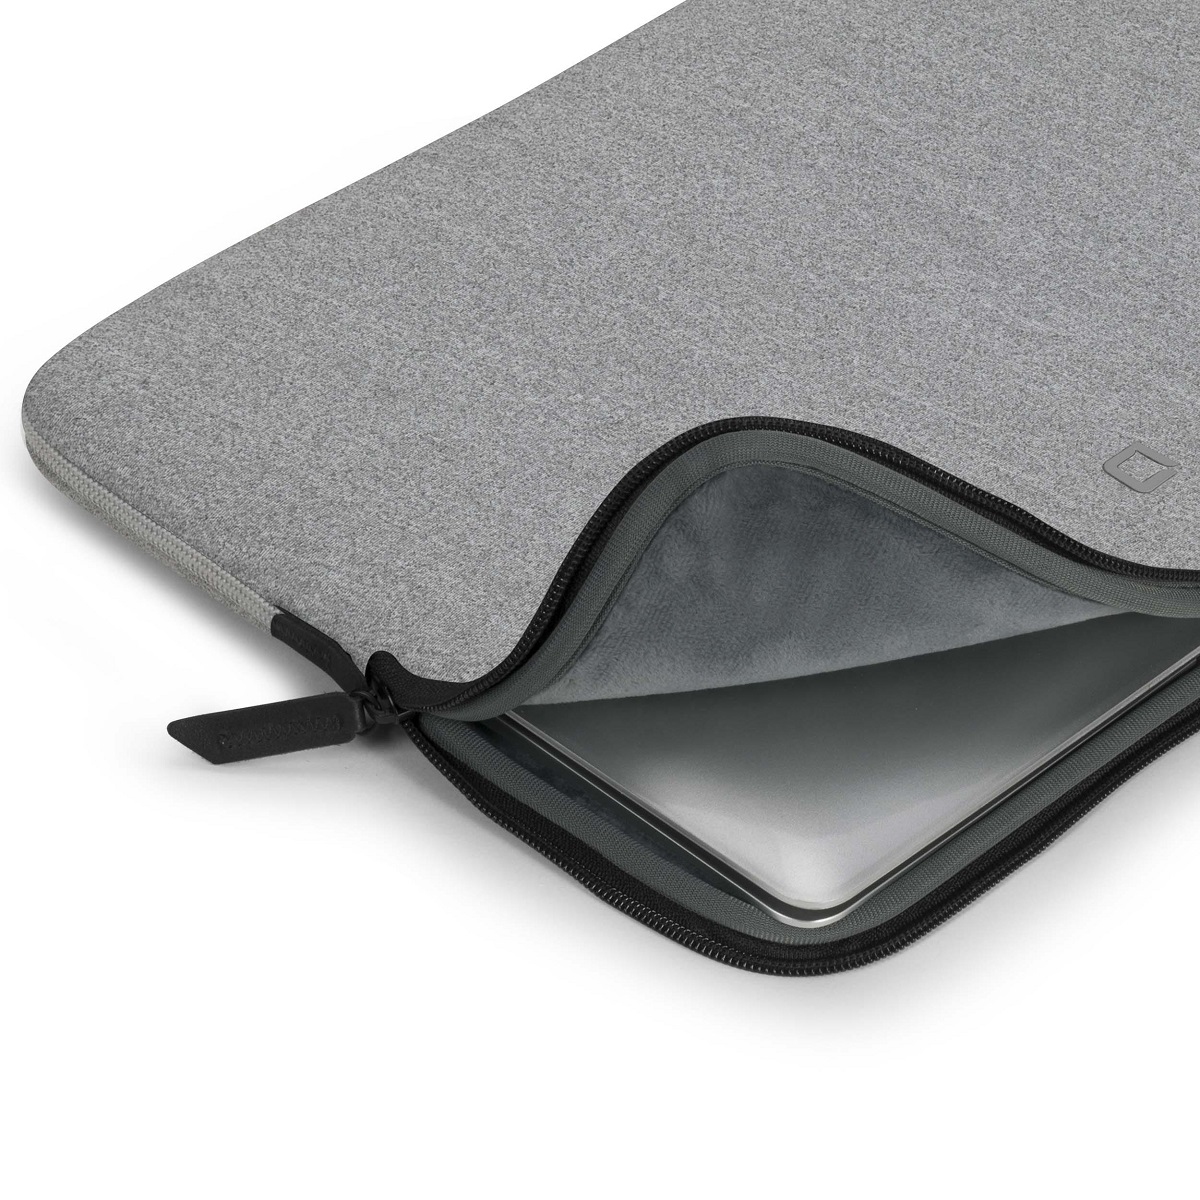 DICOTA D31751 Notebookhülle Sleeve Apple Grey Neopren, für